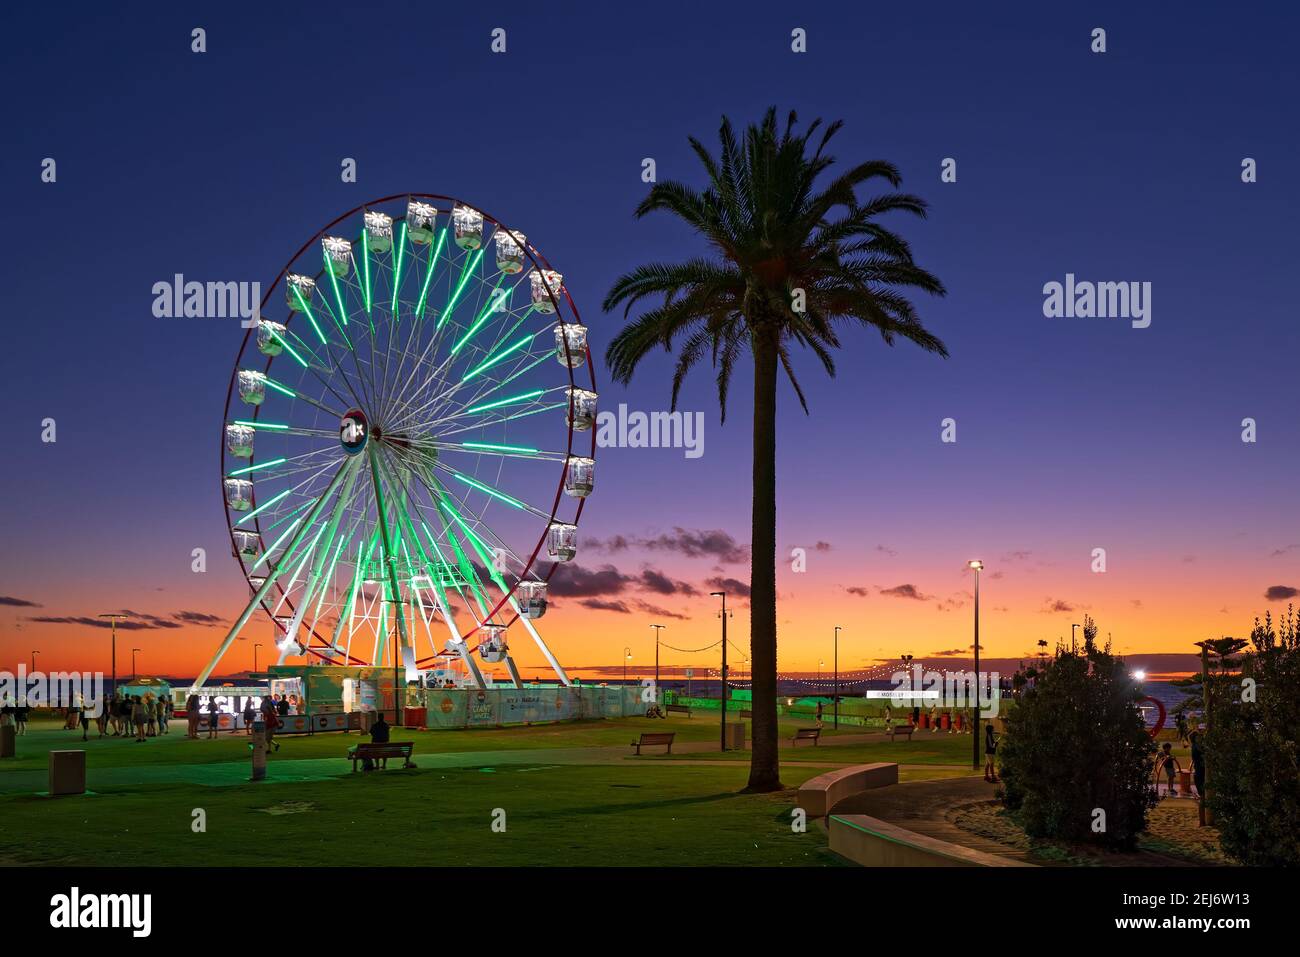 Adelaide, South Australia - 22. Februar 2021: Glenelg Mix102,3 Giant Ferris Wheel am Moseley Square beleuchtet in der Dämmerung in Richtung des Anlegeplatzes. Stockfoto